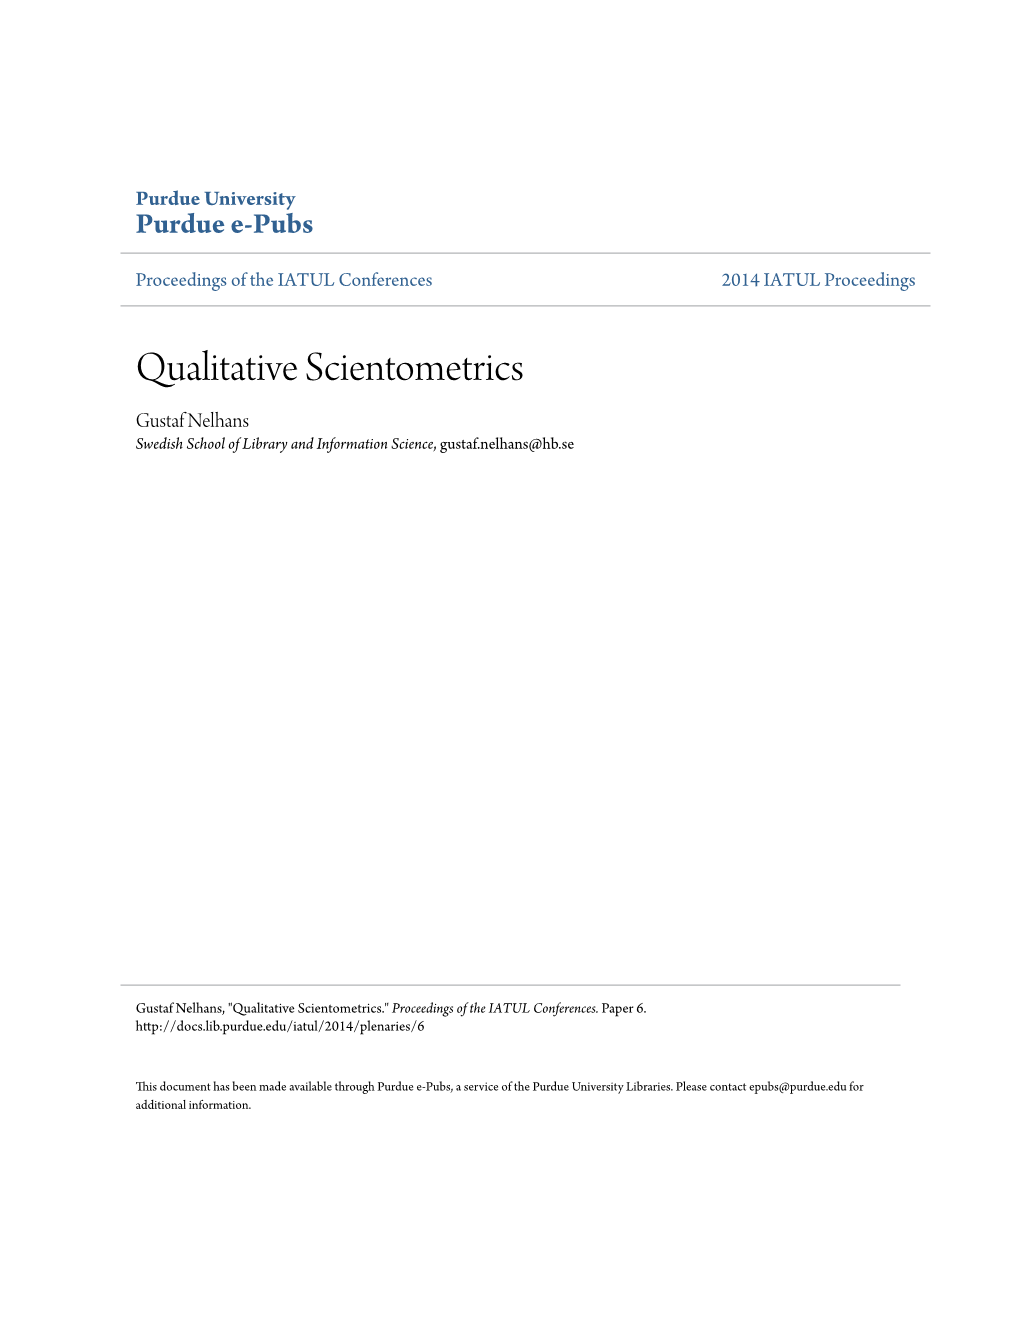 Qualitative Scientometrics Gustaf Nelhans Swedish School of Library and Information Science, Gustaf.Nelhans@Hb.Se